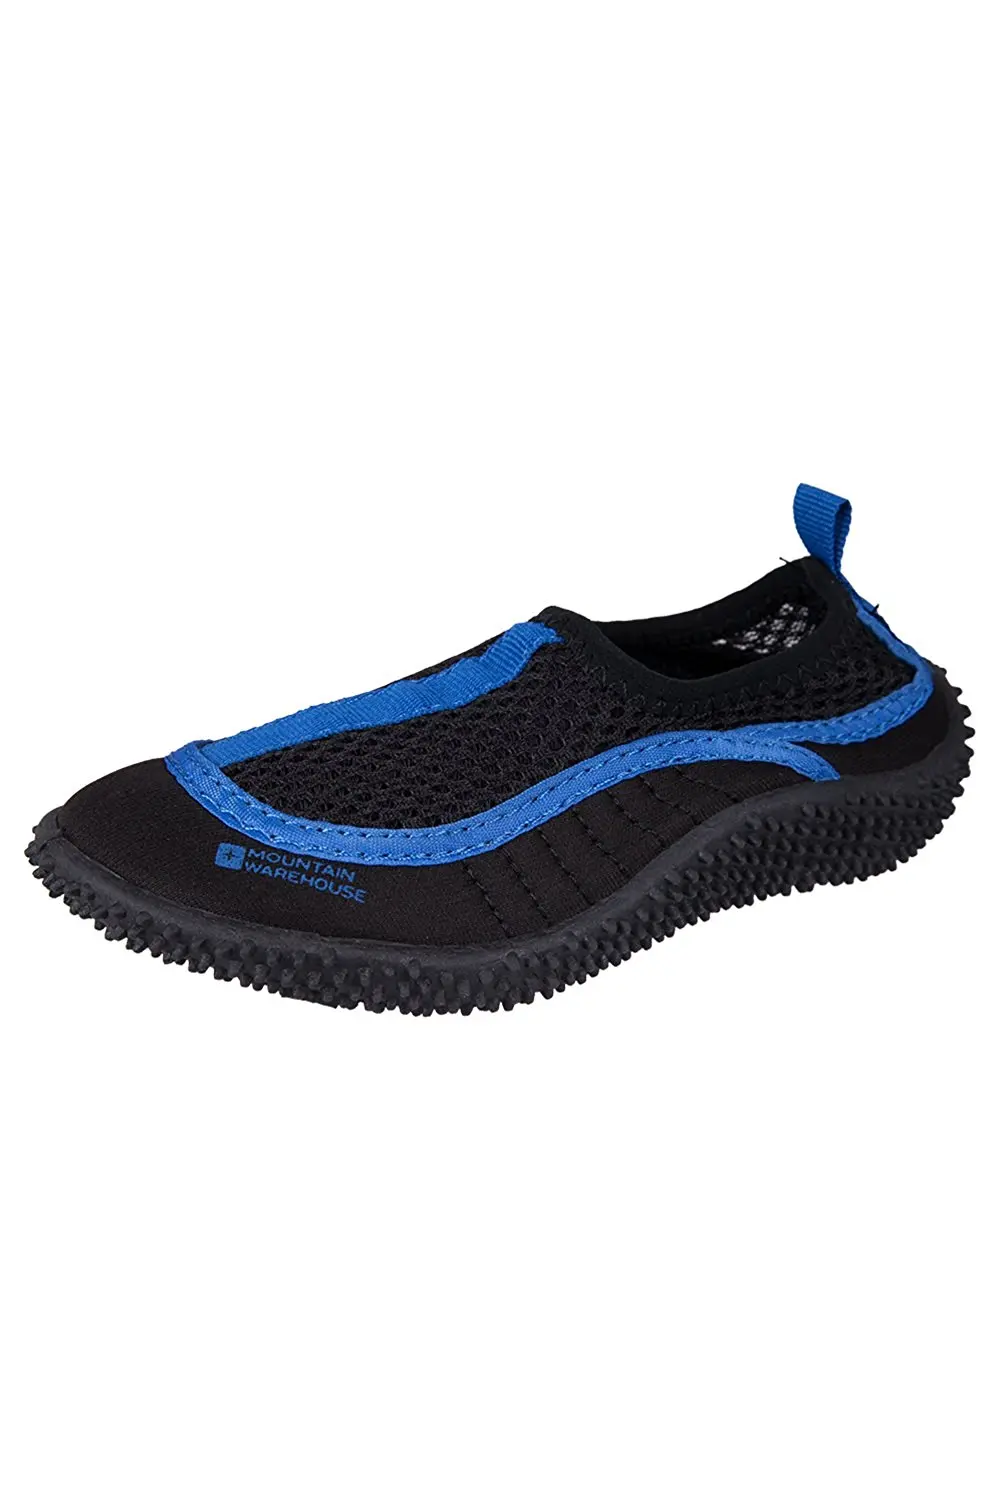 mountain warehouse aqua shoes